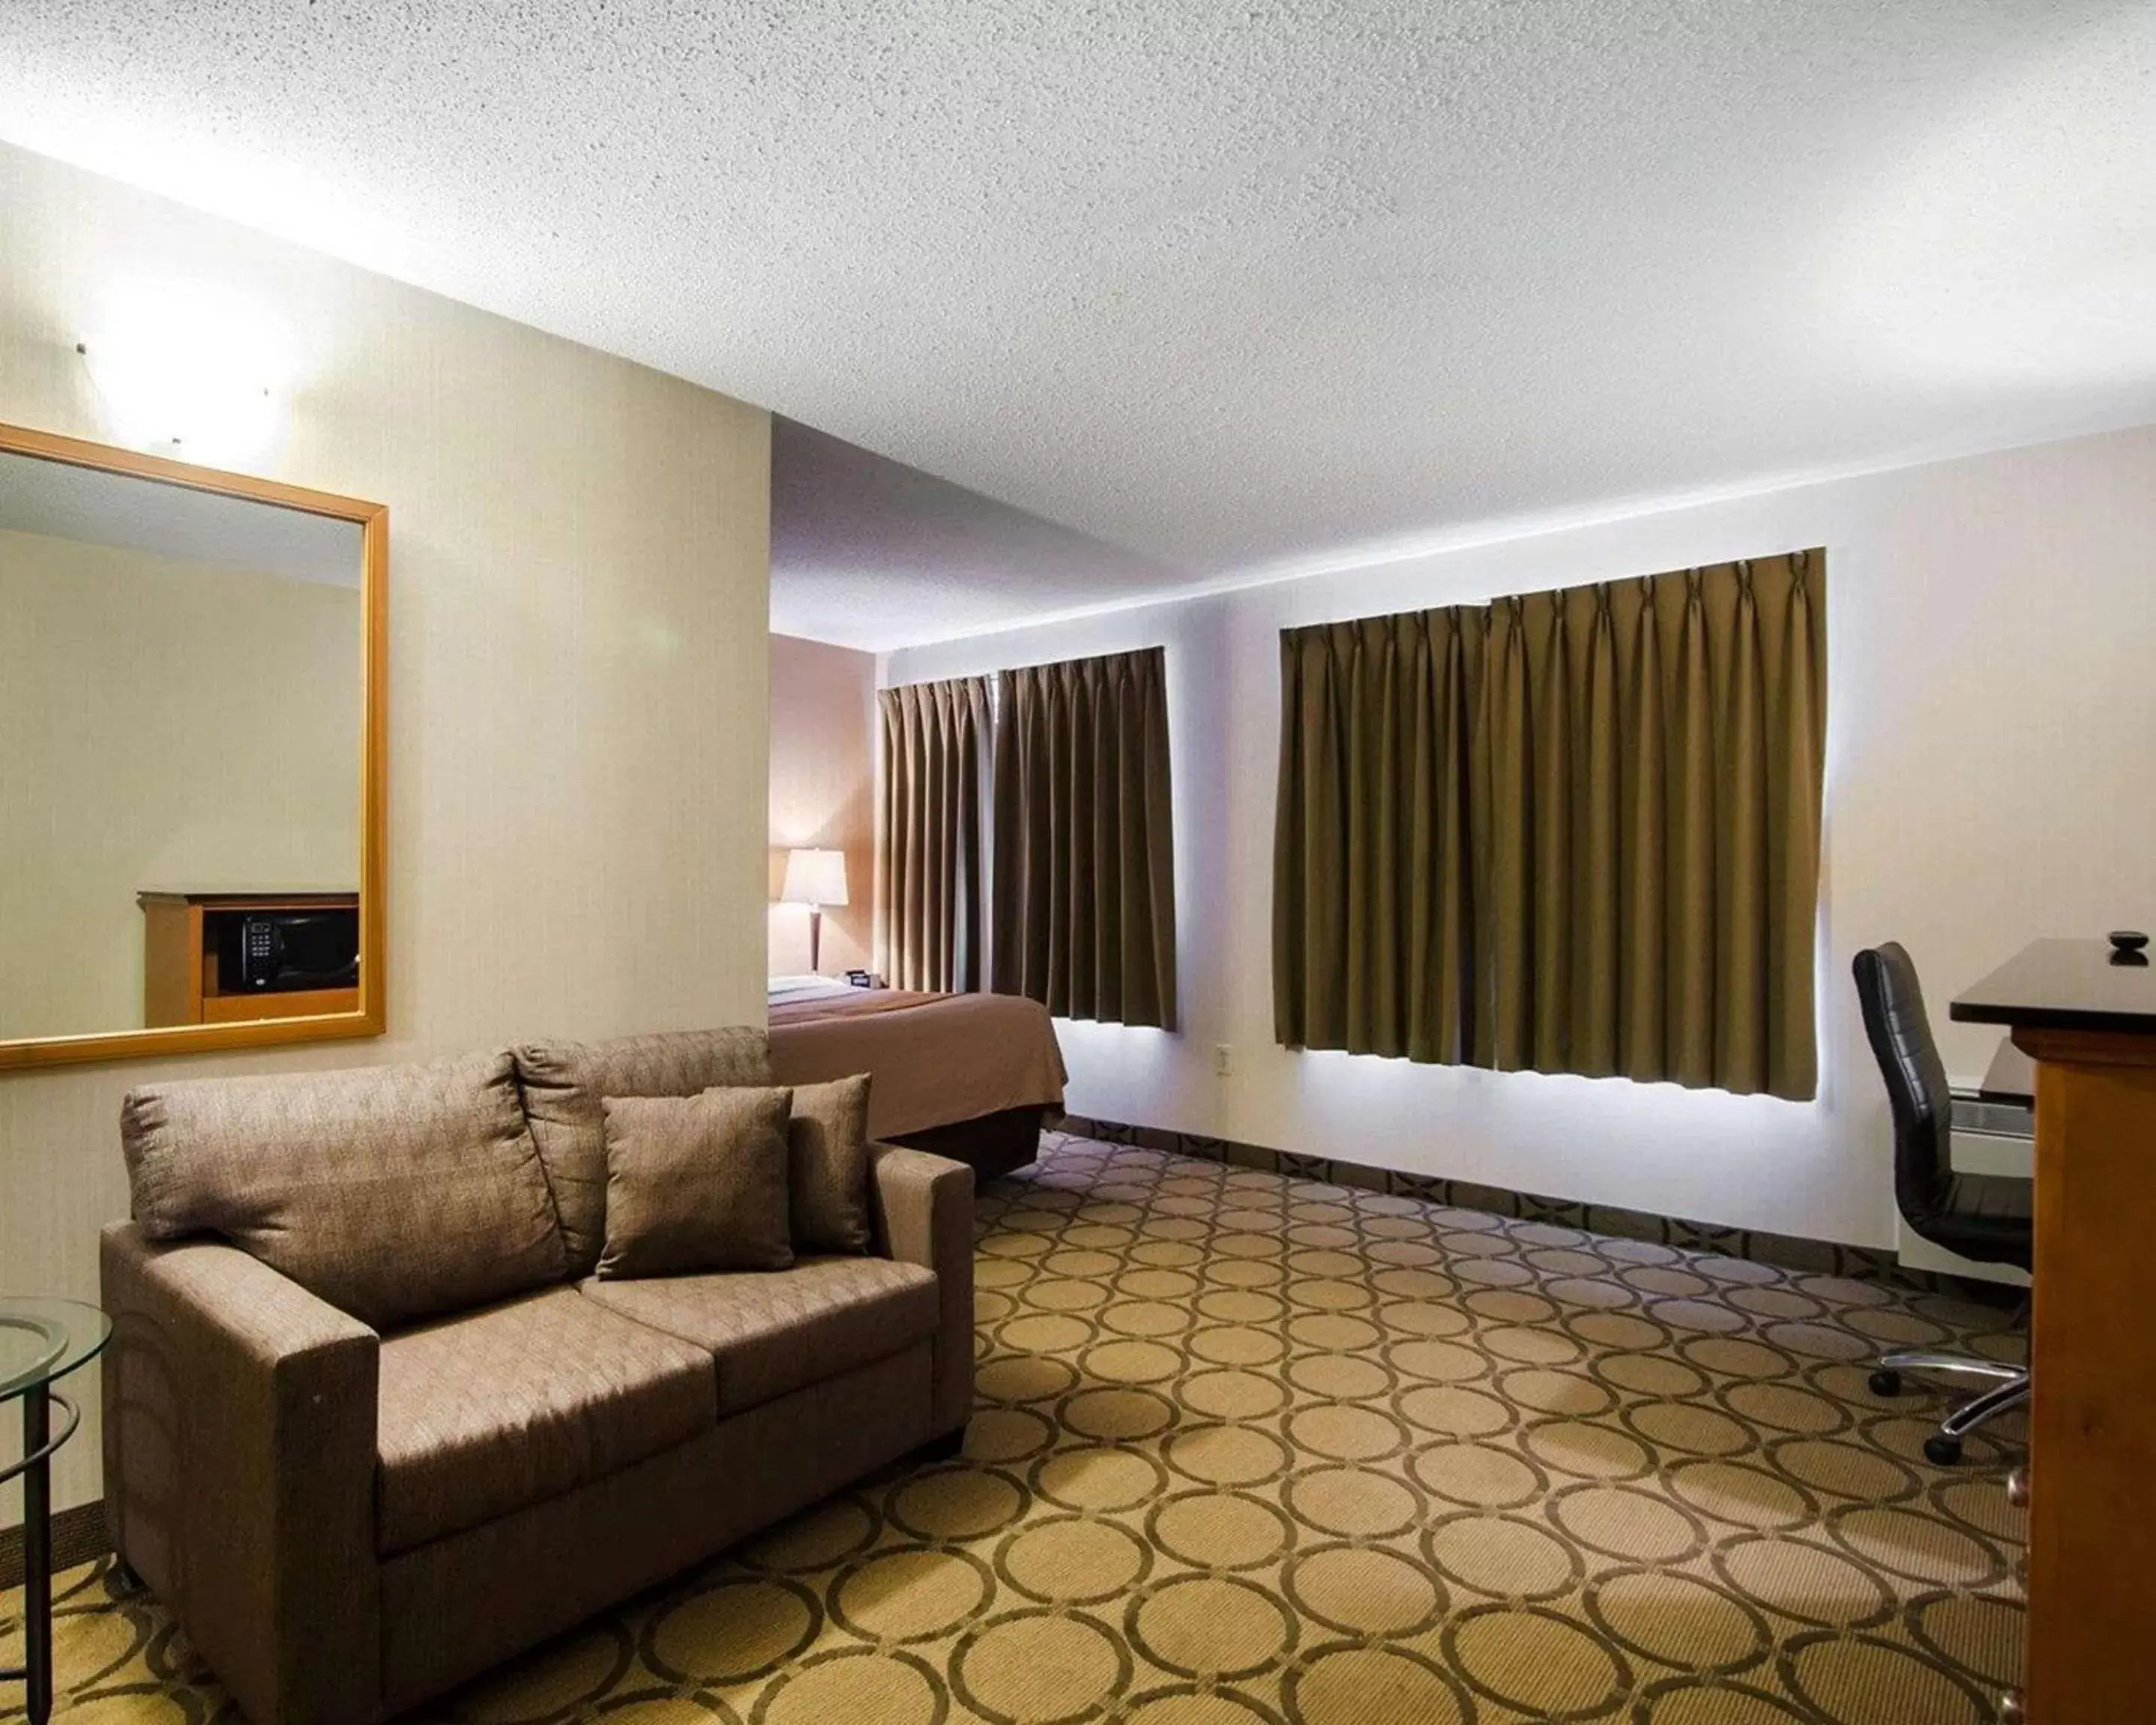 Photo of the whole room, Seating Area in Comfort Inn Saskatoon